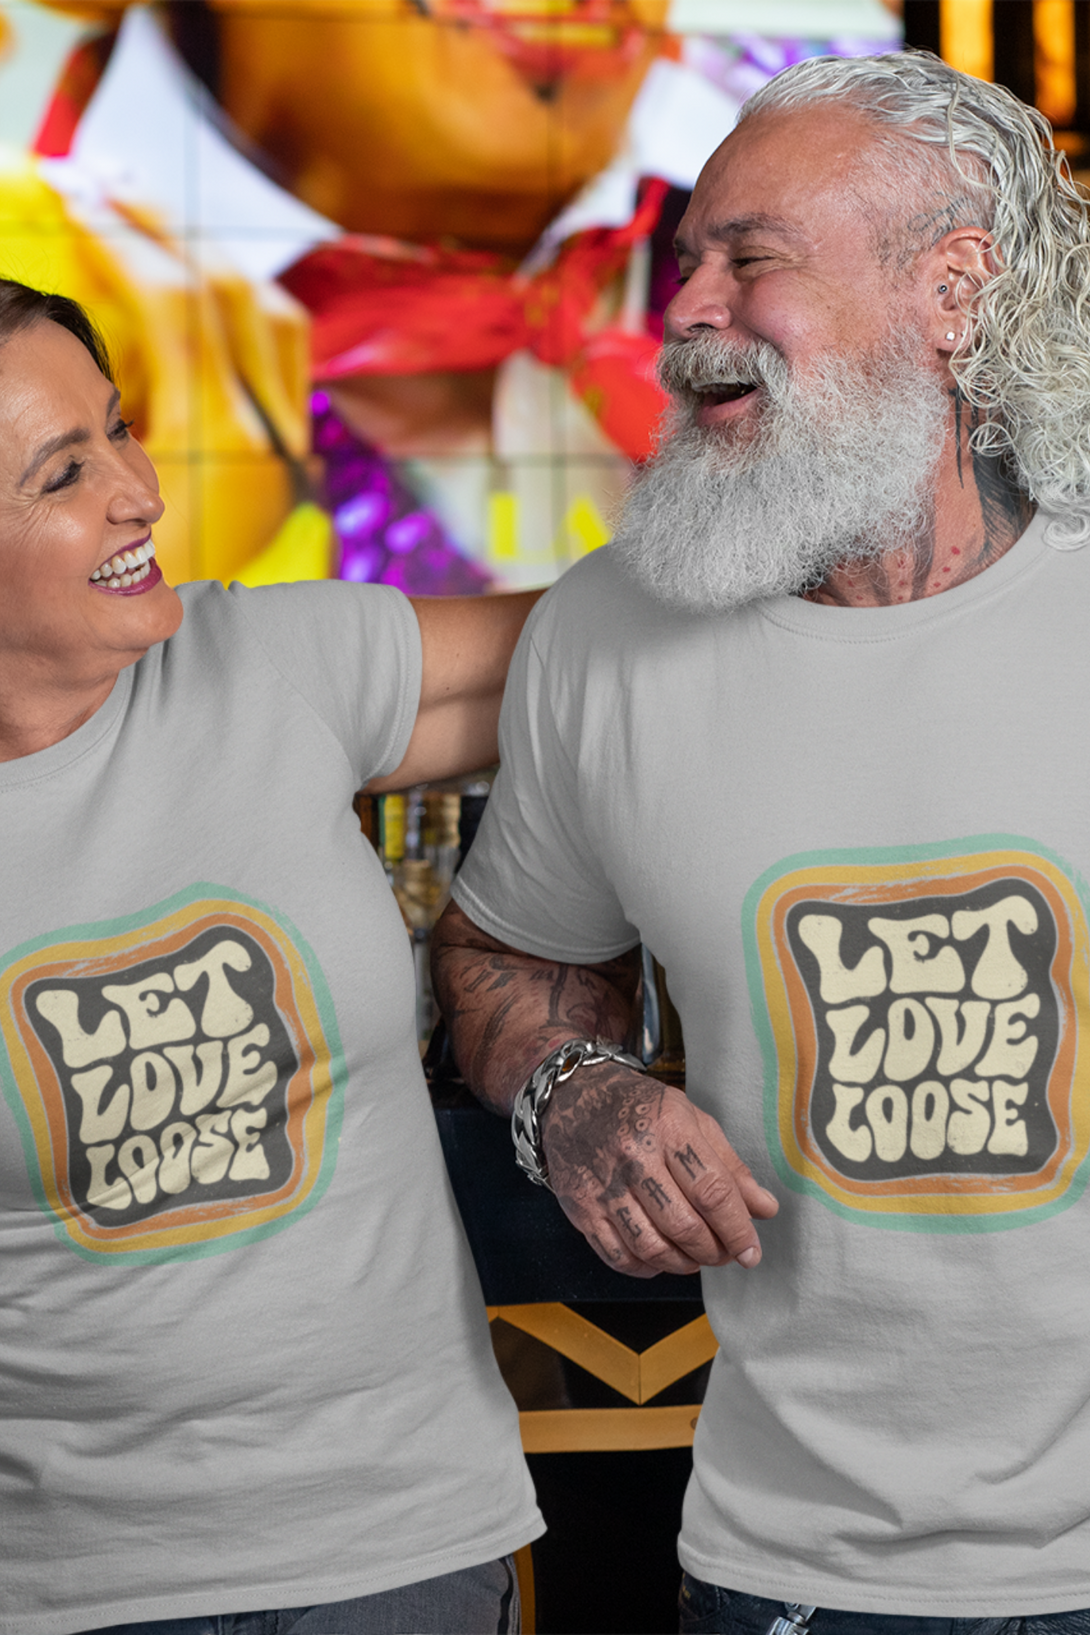 Let Love Loose Printed T-Shirt For Men - WowWaves - 2